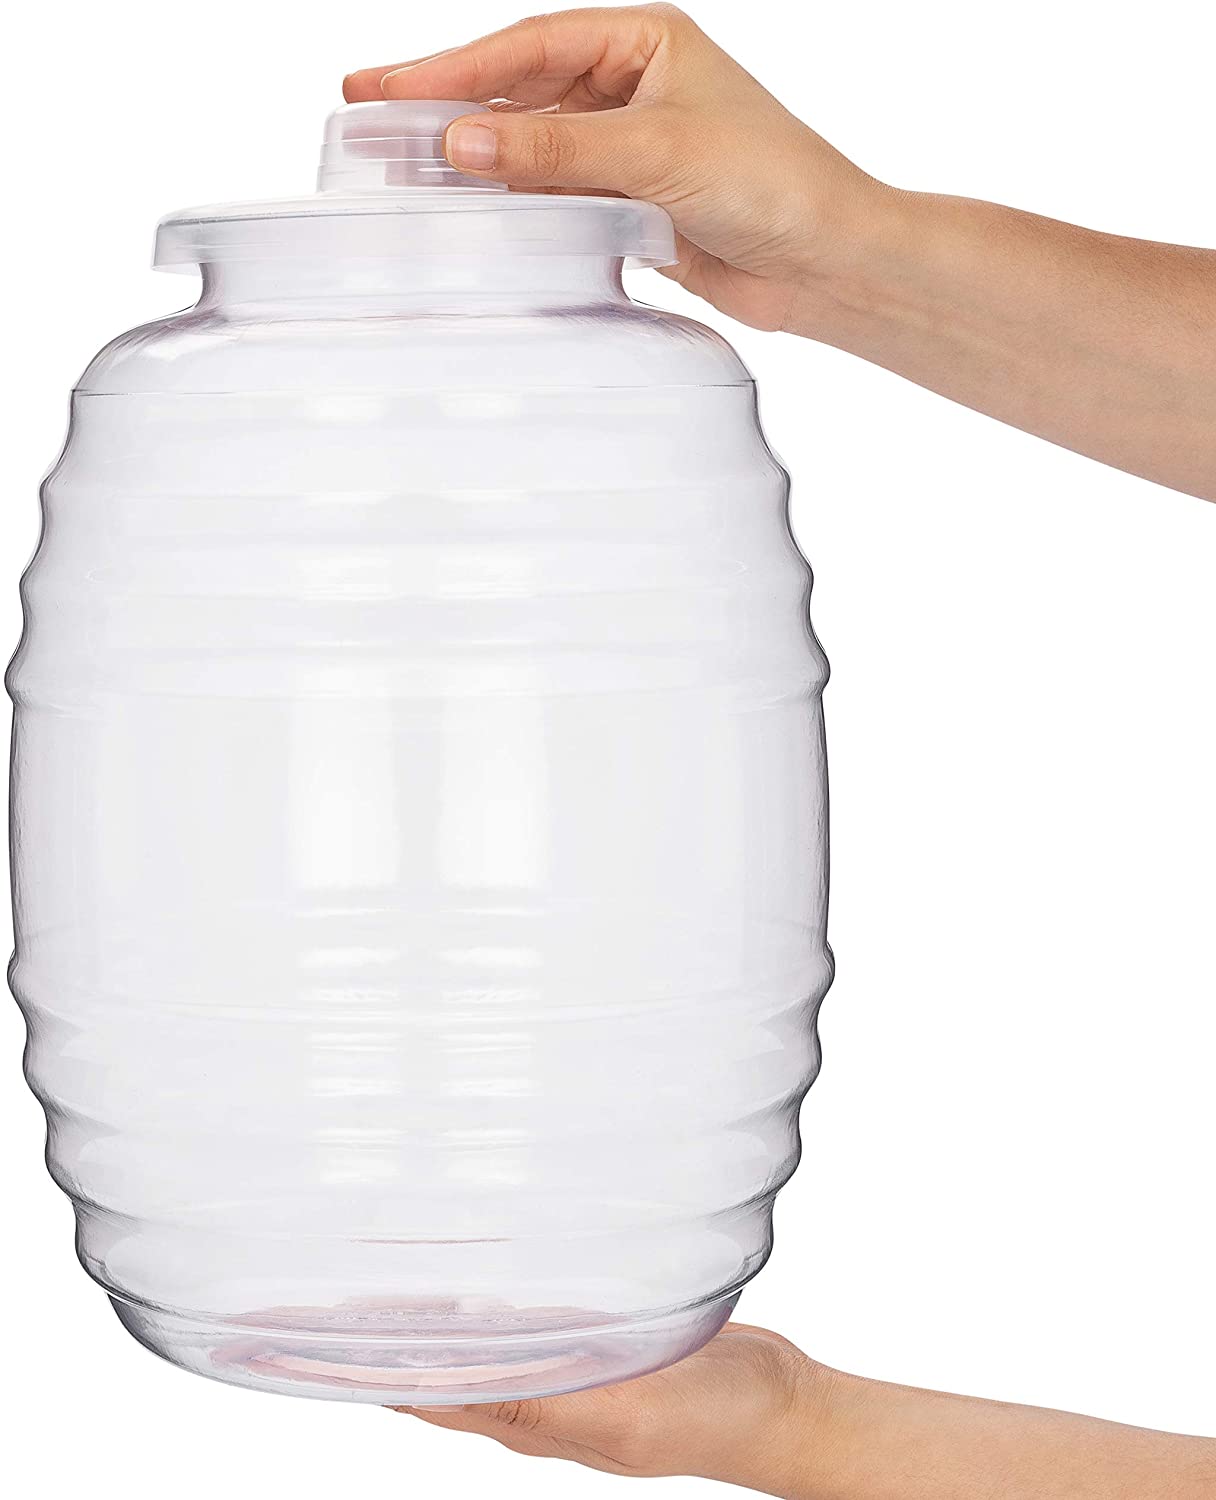 Wholesale Price Plastic Water Jug Water Pot Bottle Kitchen